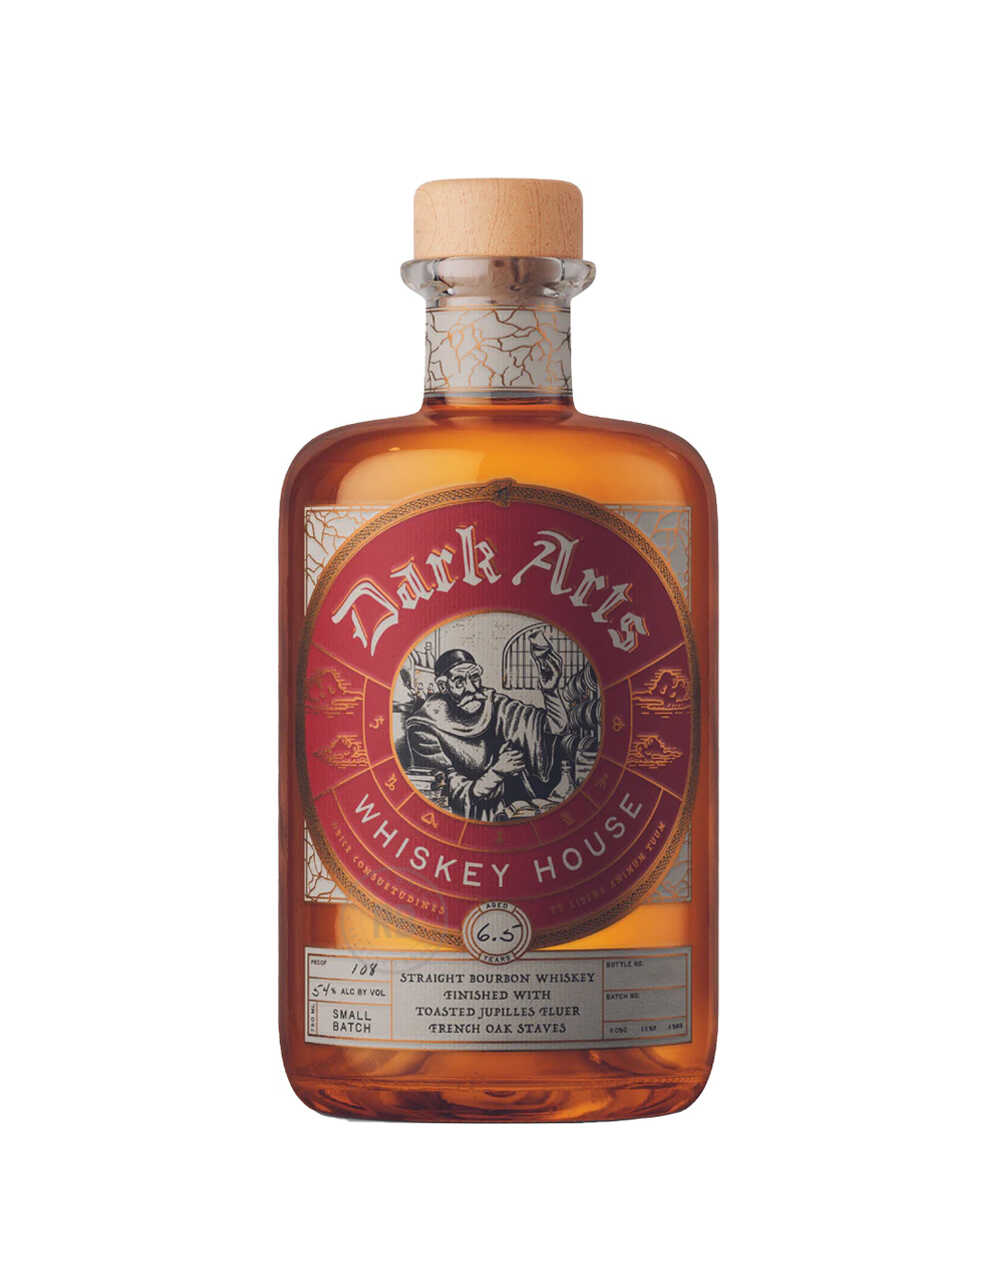 Dark Arts French Oak Staves Small Batch 7 Year Old Straight Bourbon Whiskey